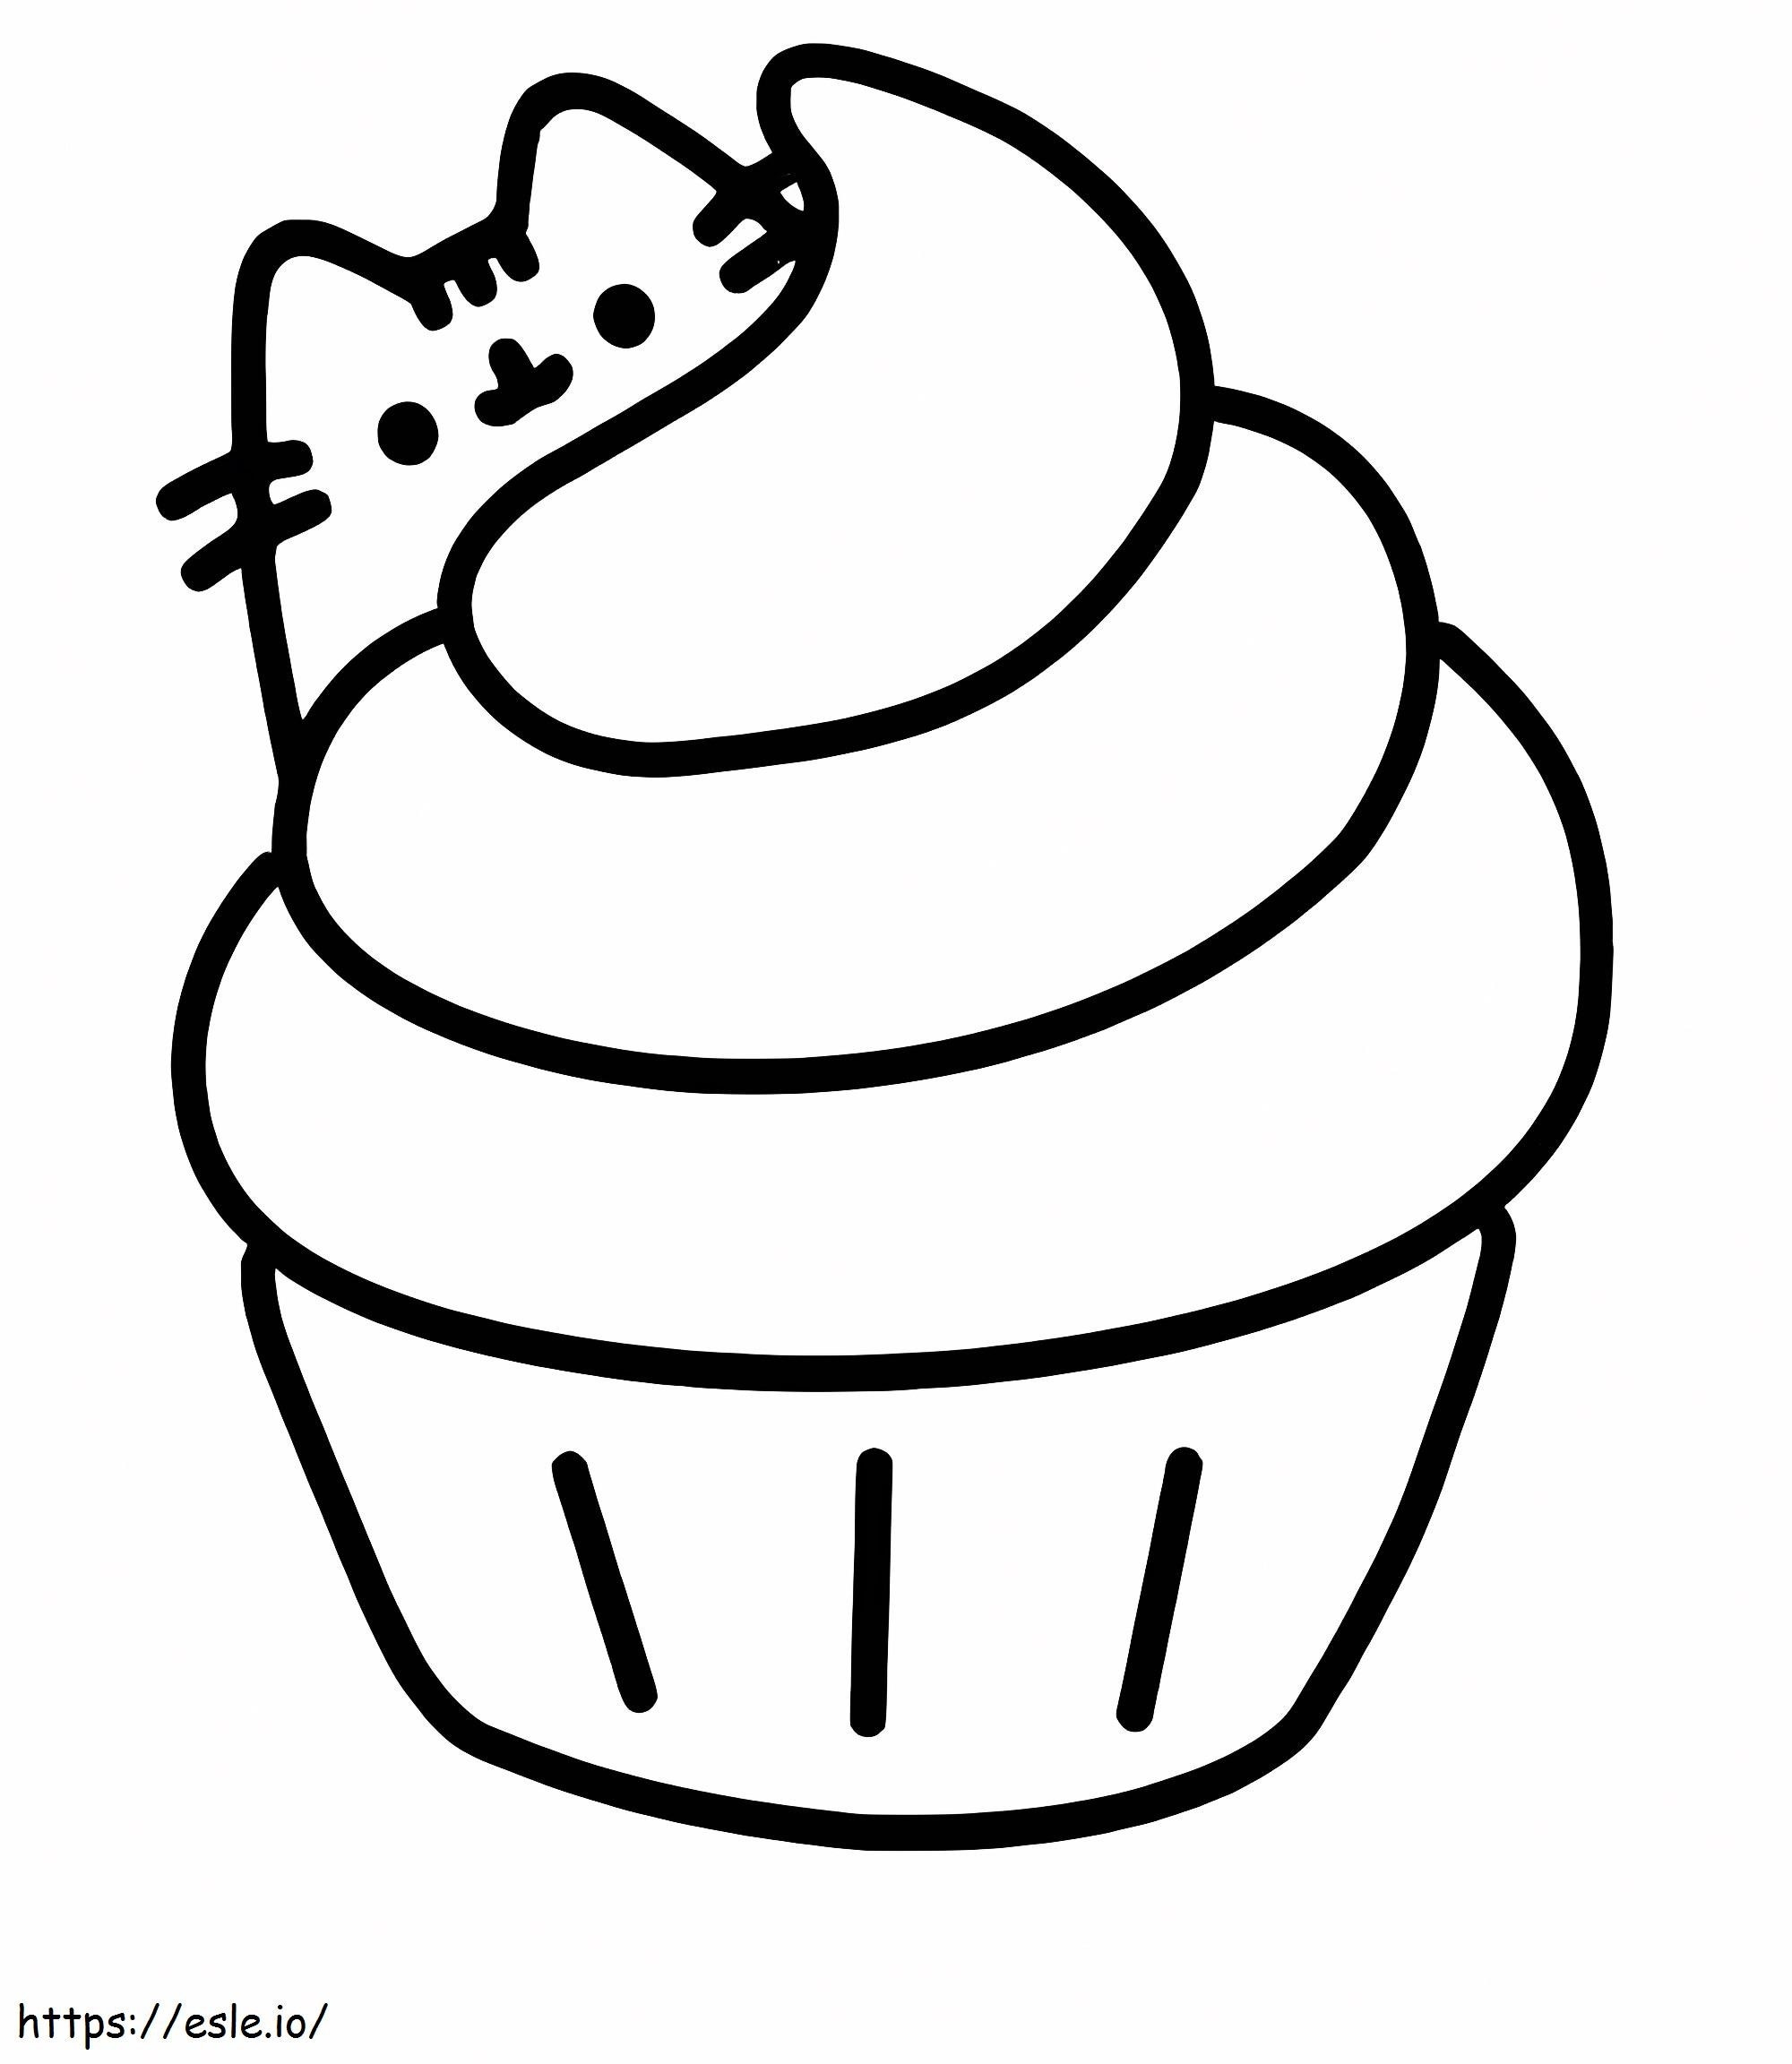 Cupcake Pusheen ausmalbilder